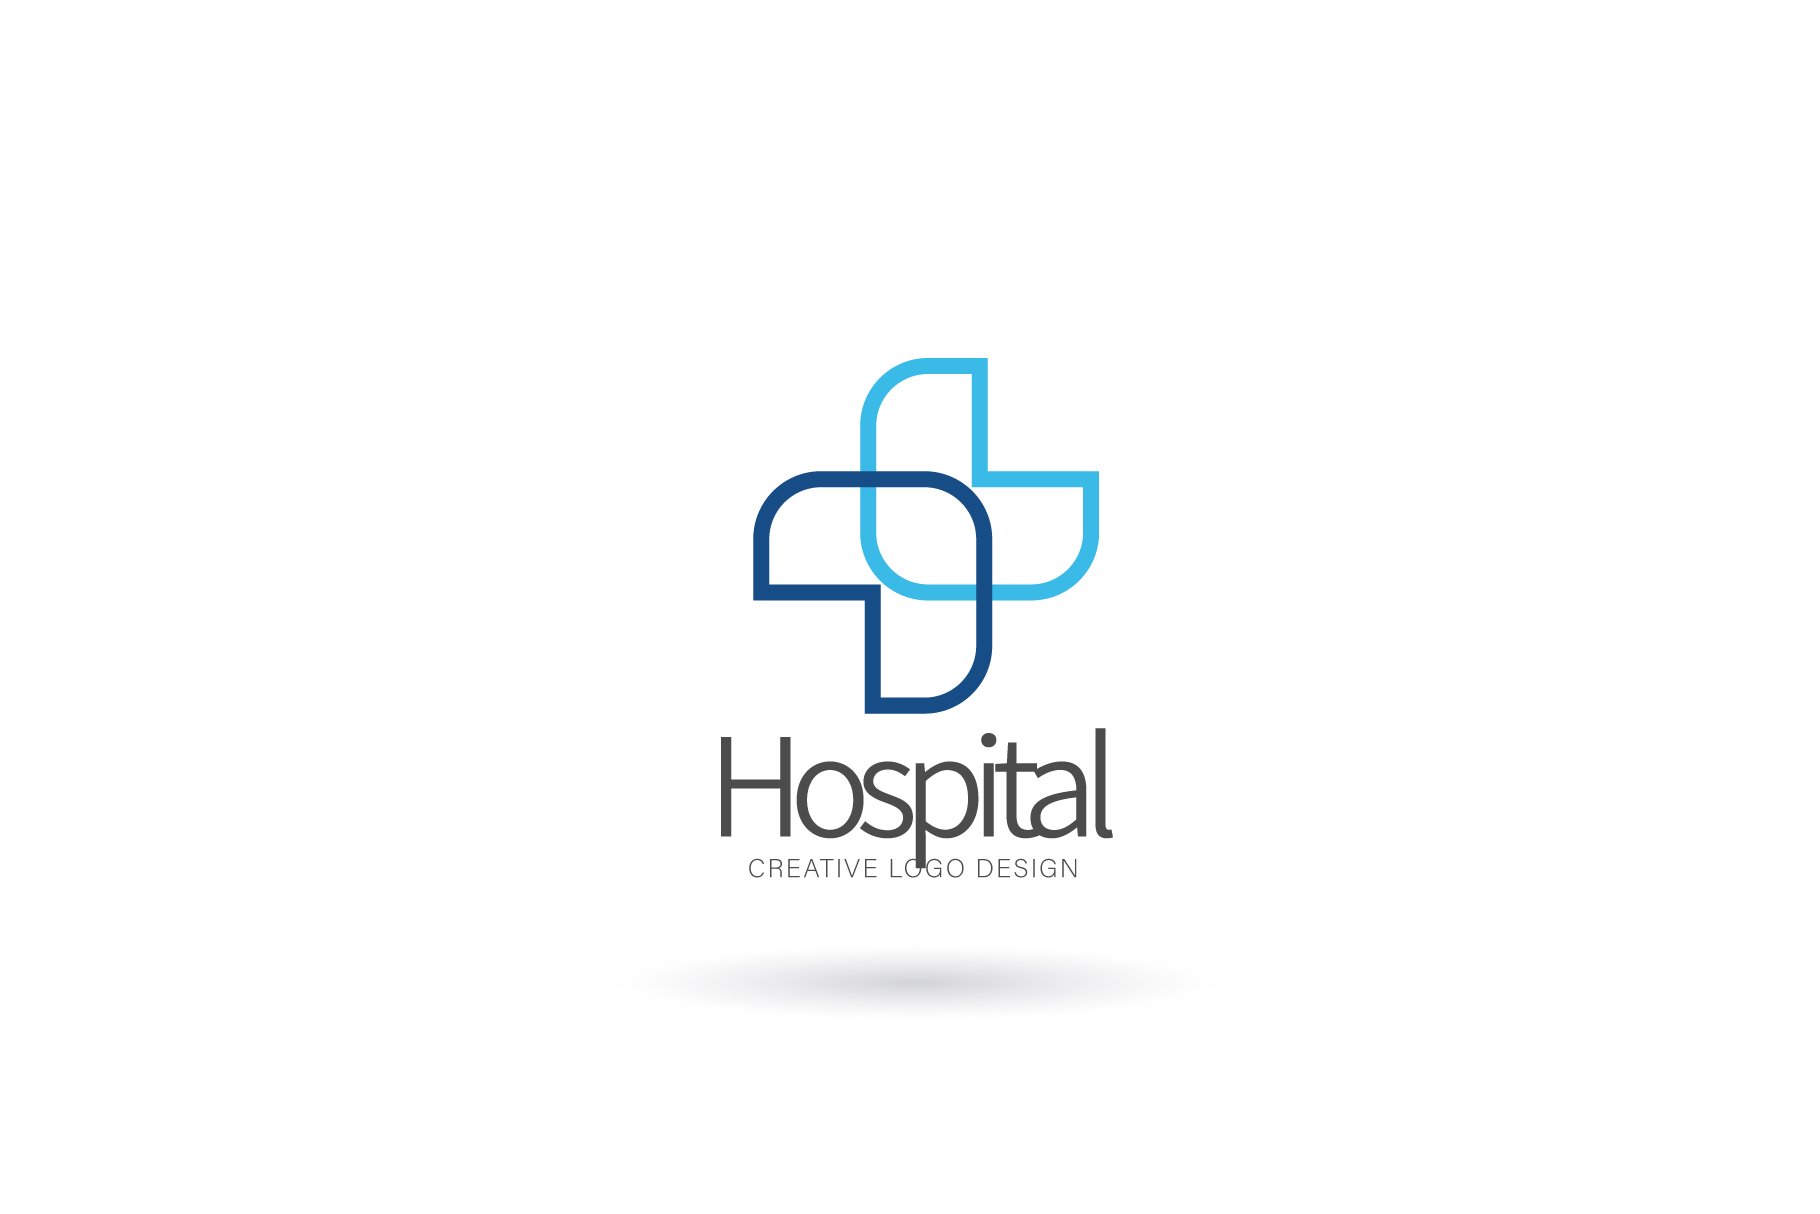 Hospital logo cover image.